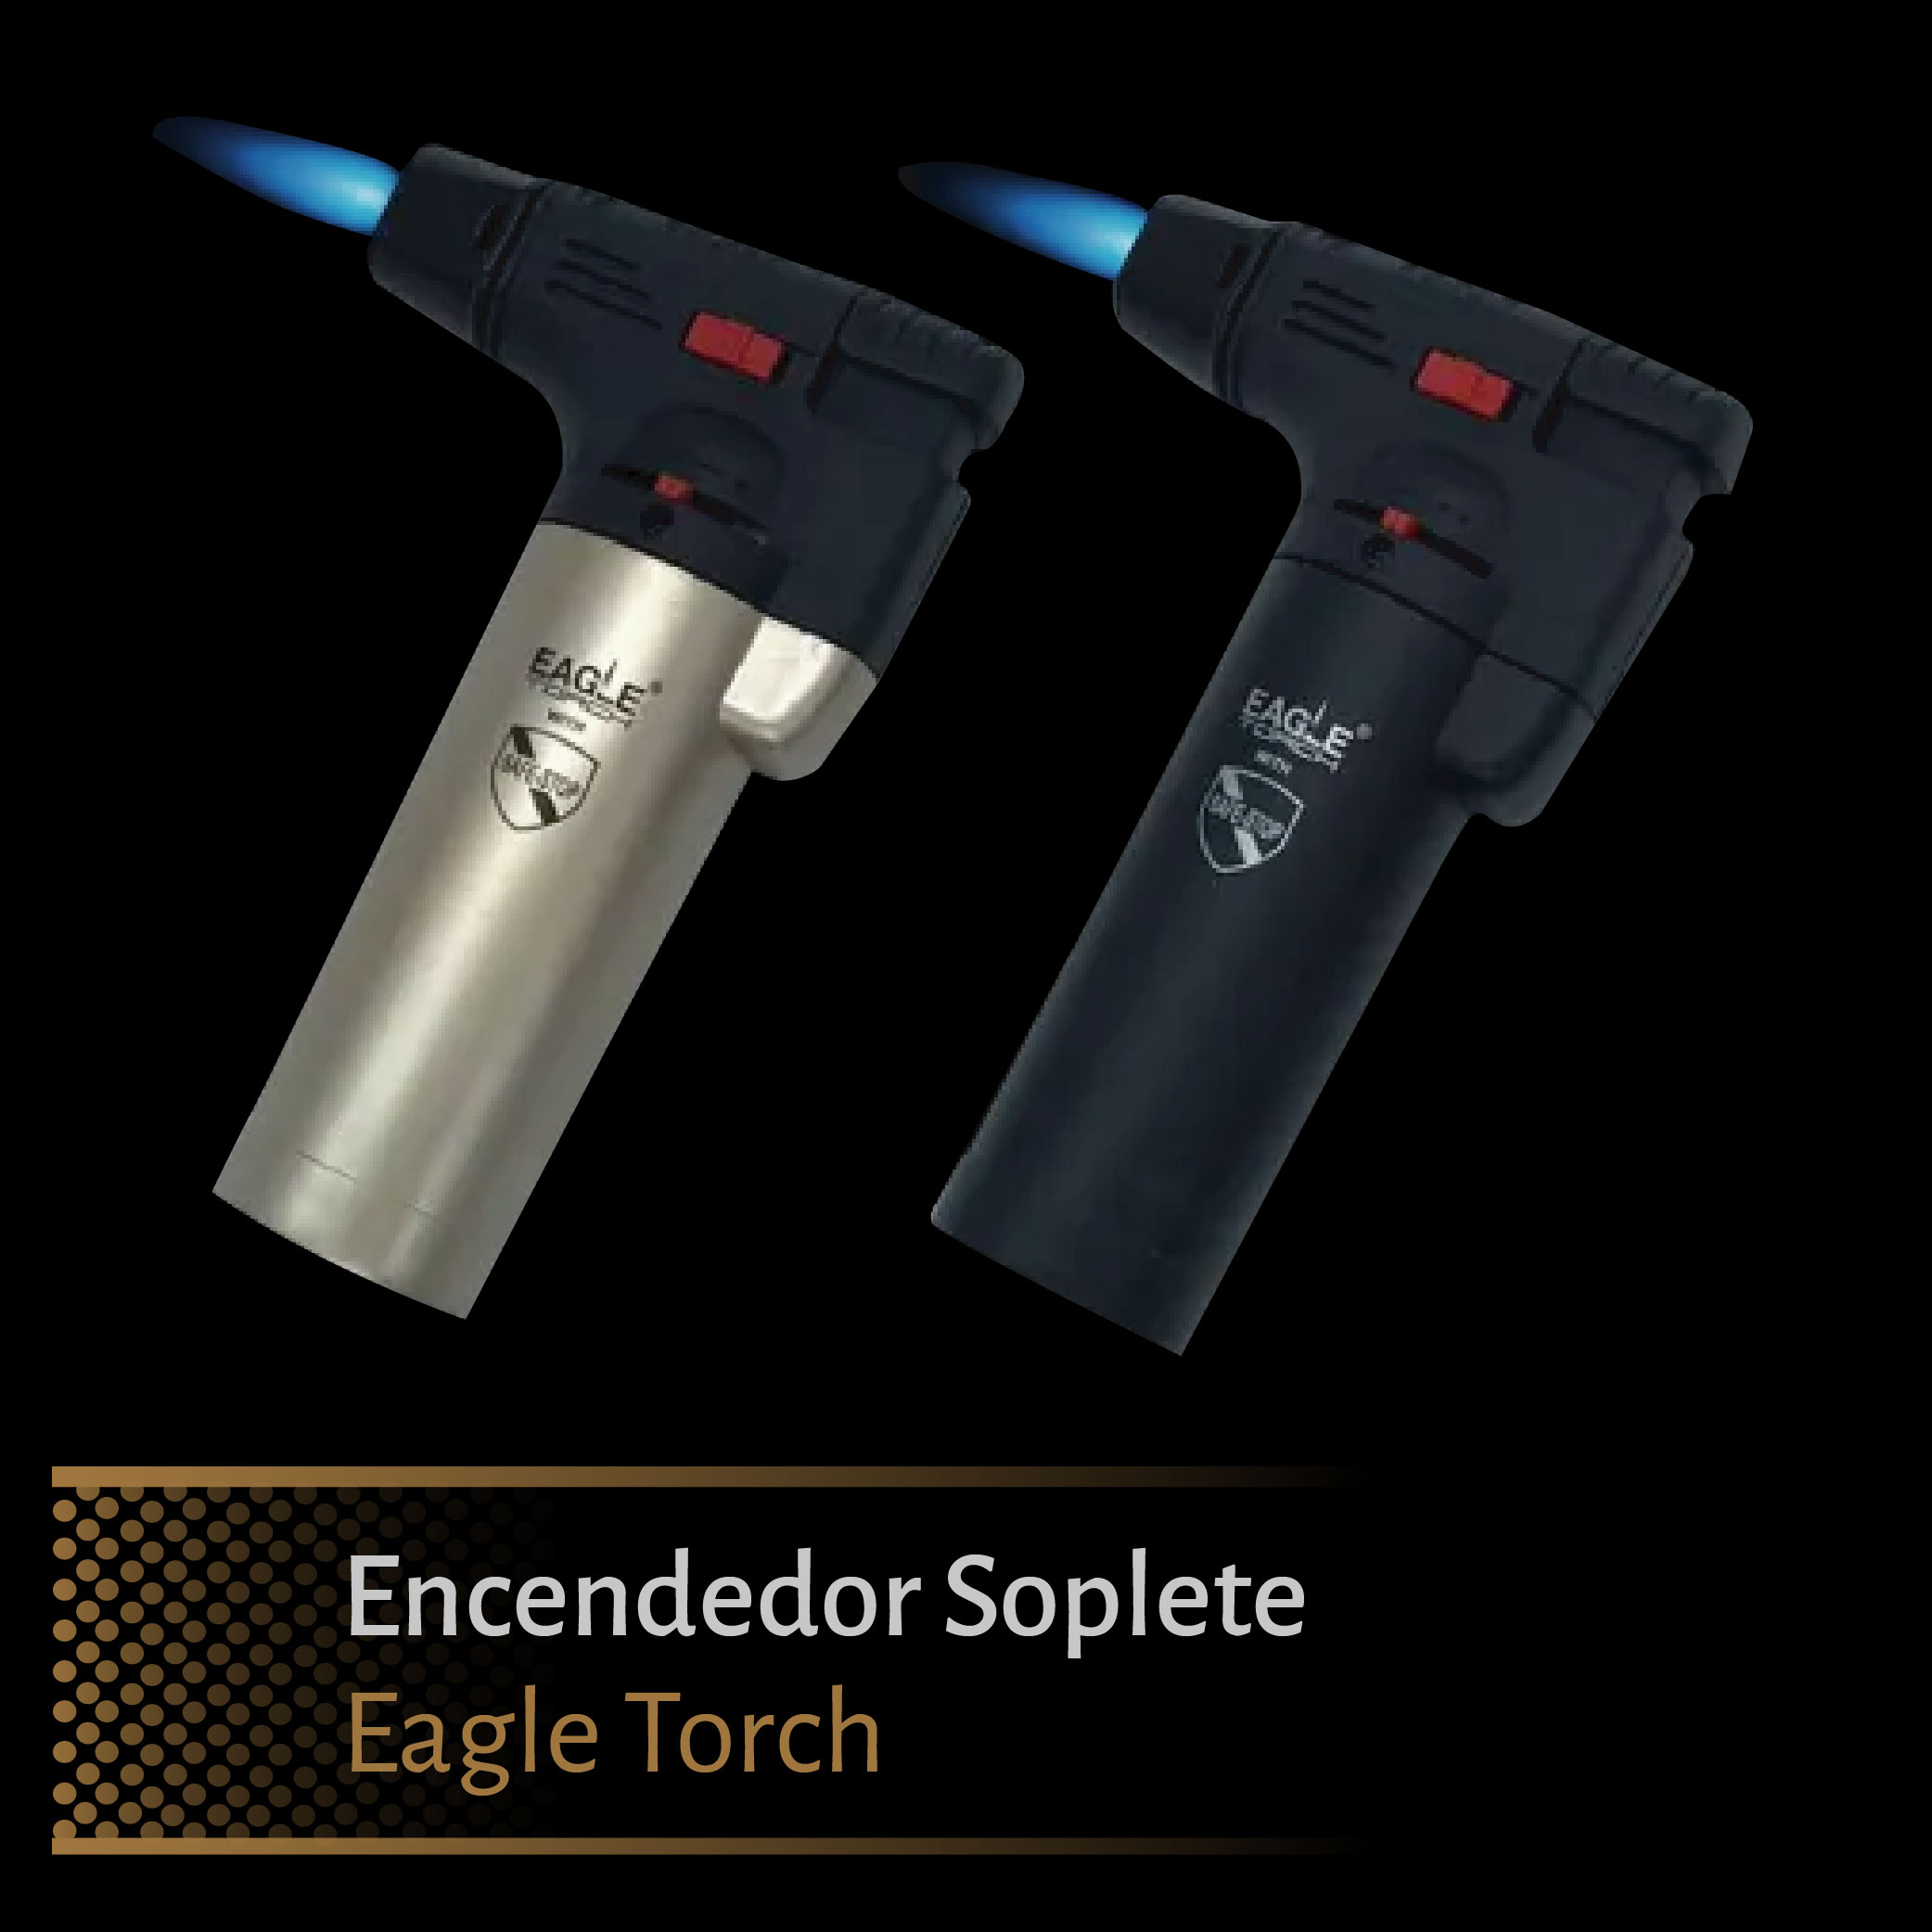 soplete eagle torch Puros